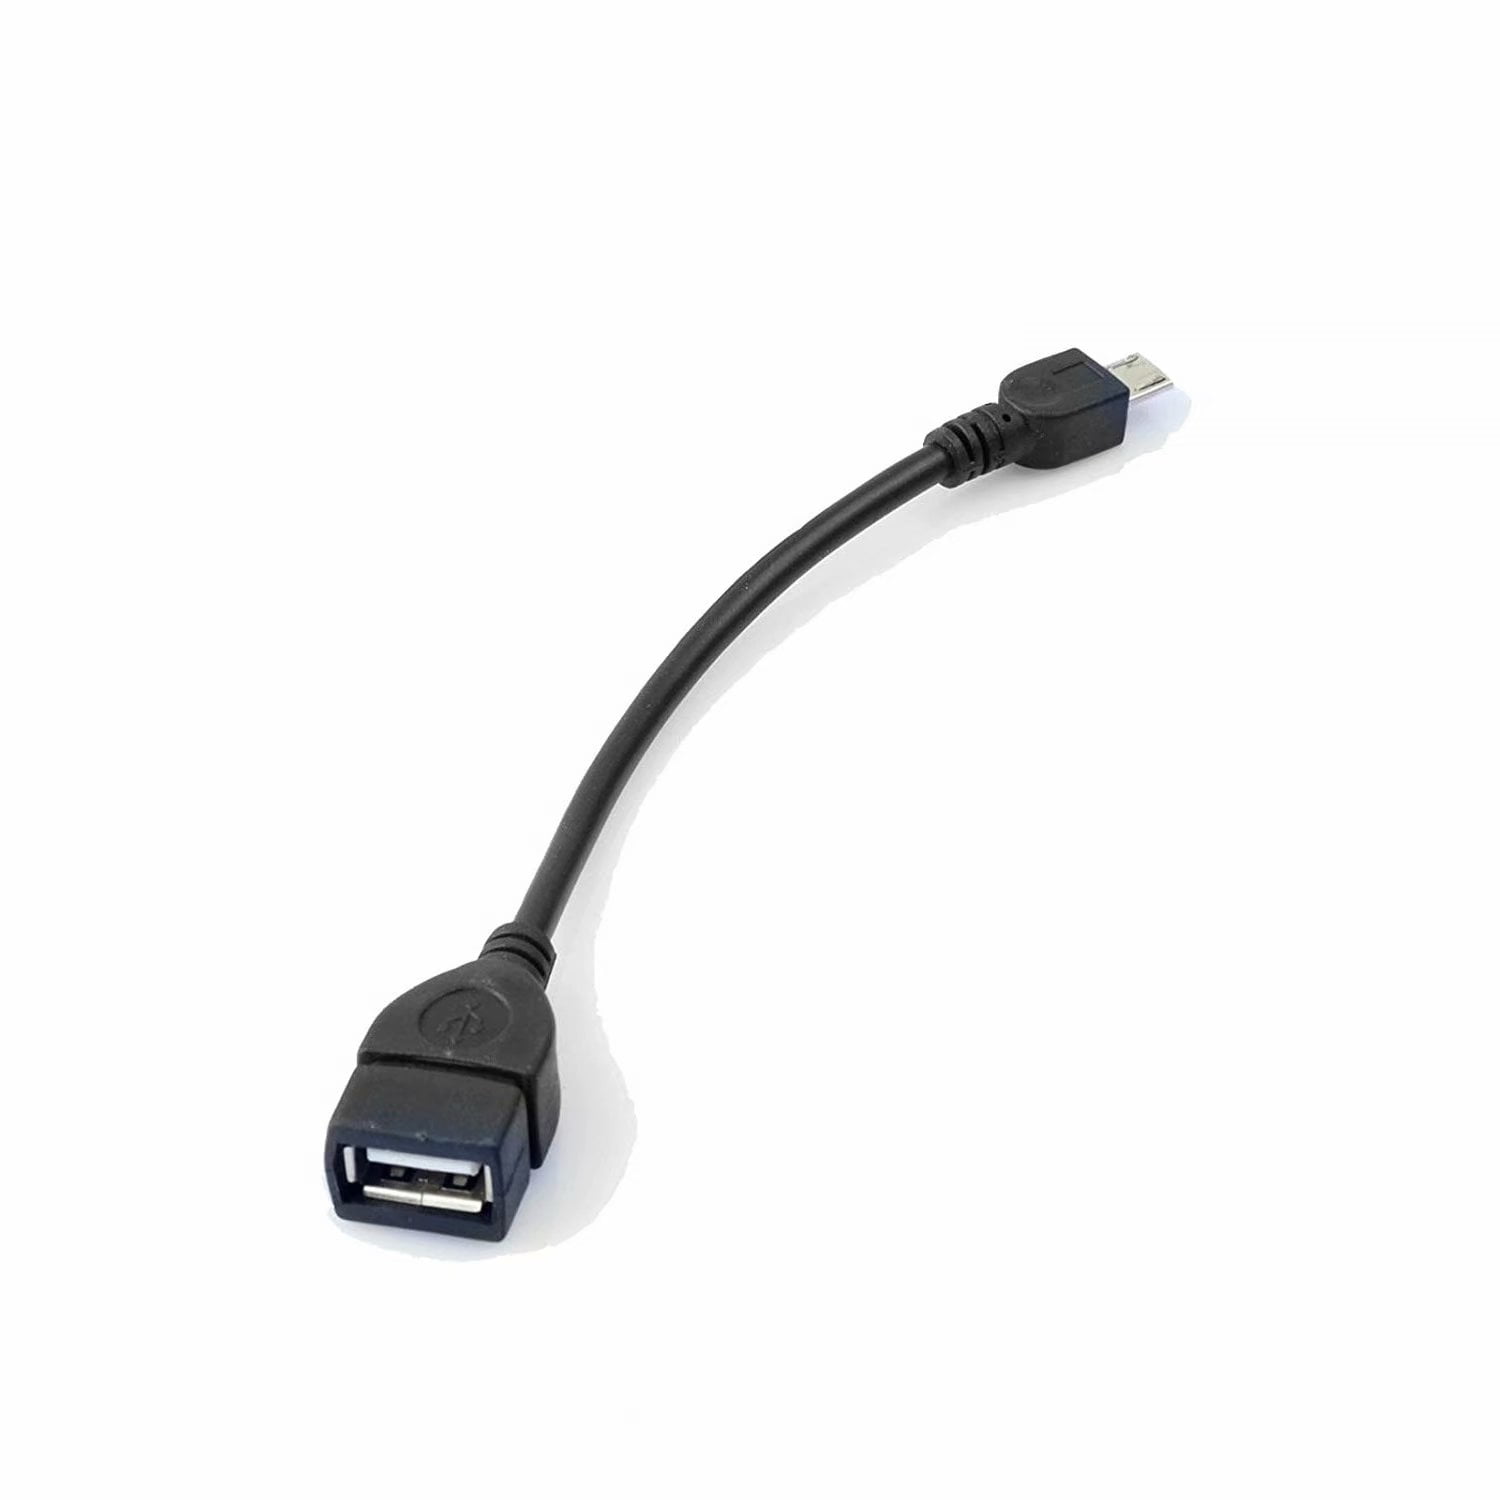 van nu af aan Konijn Nu Mini USB OTG Cable for Digital Cameras - USB A Female to Mini USB B 5 Pin  Male Adapter Cable（1 Pack) - Walmart.com